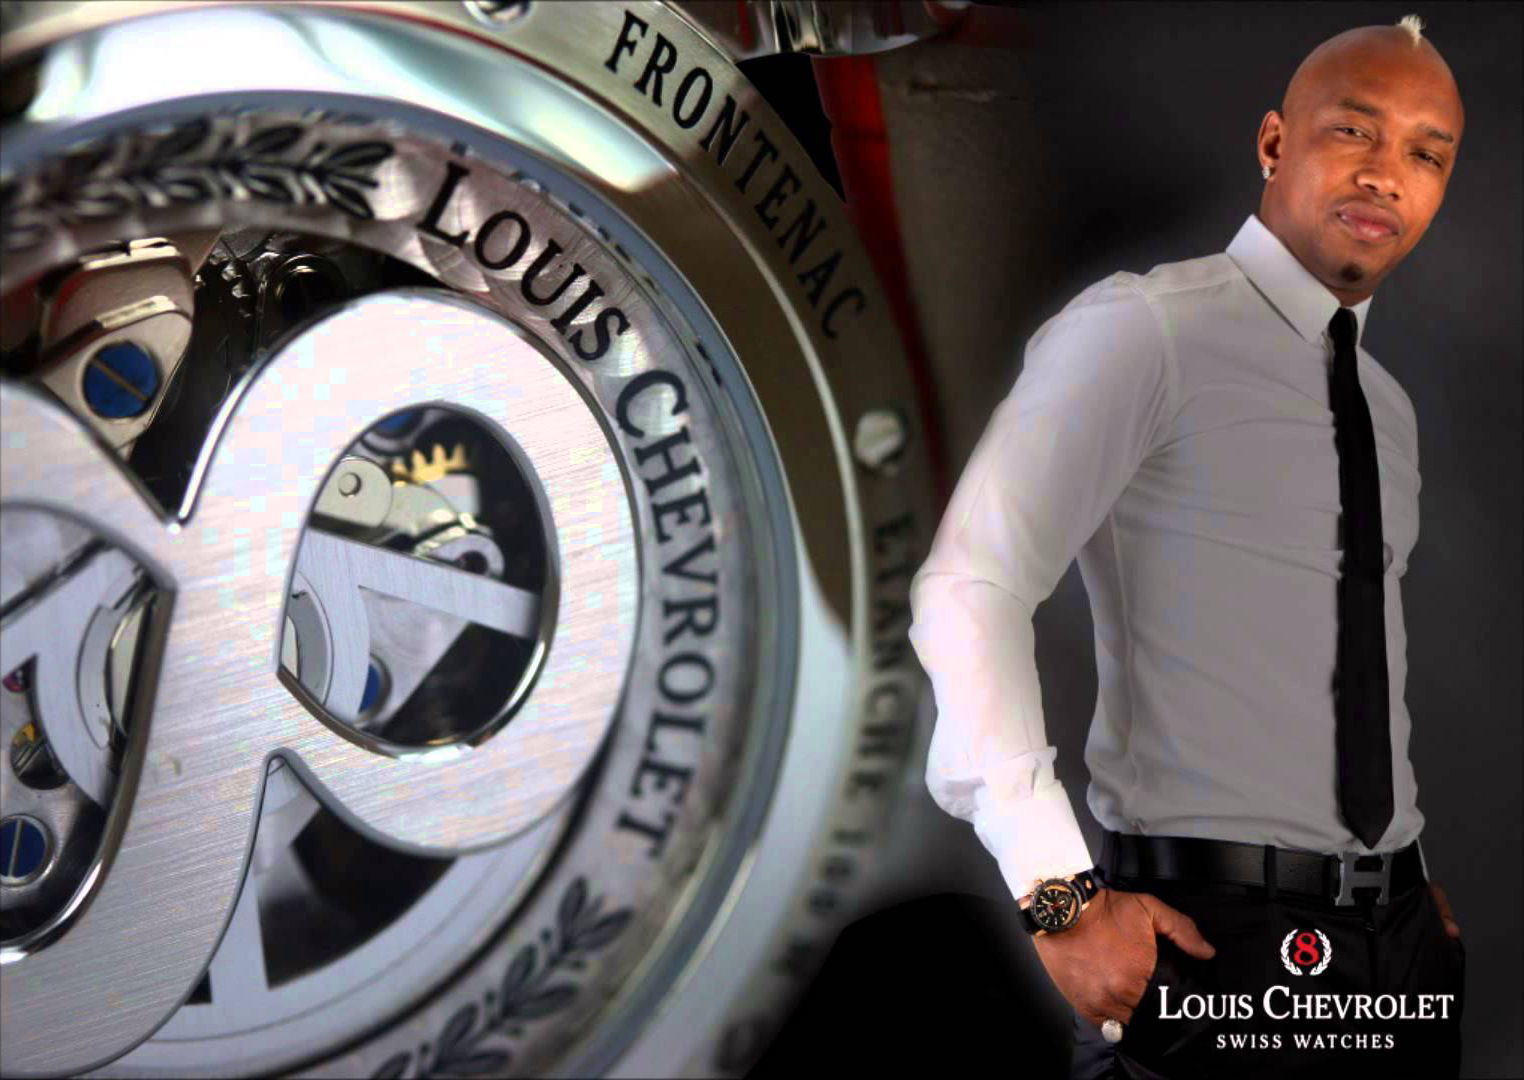 El Hadji Diouf, ambassador of Louis Chevrolet watches